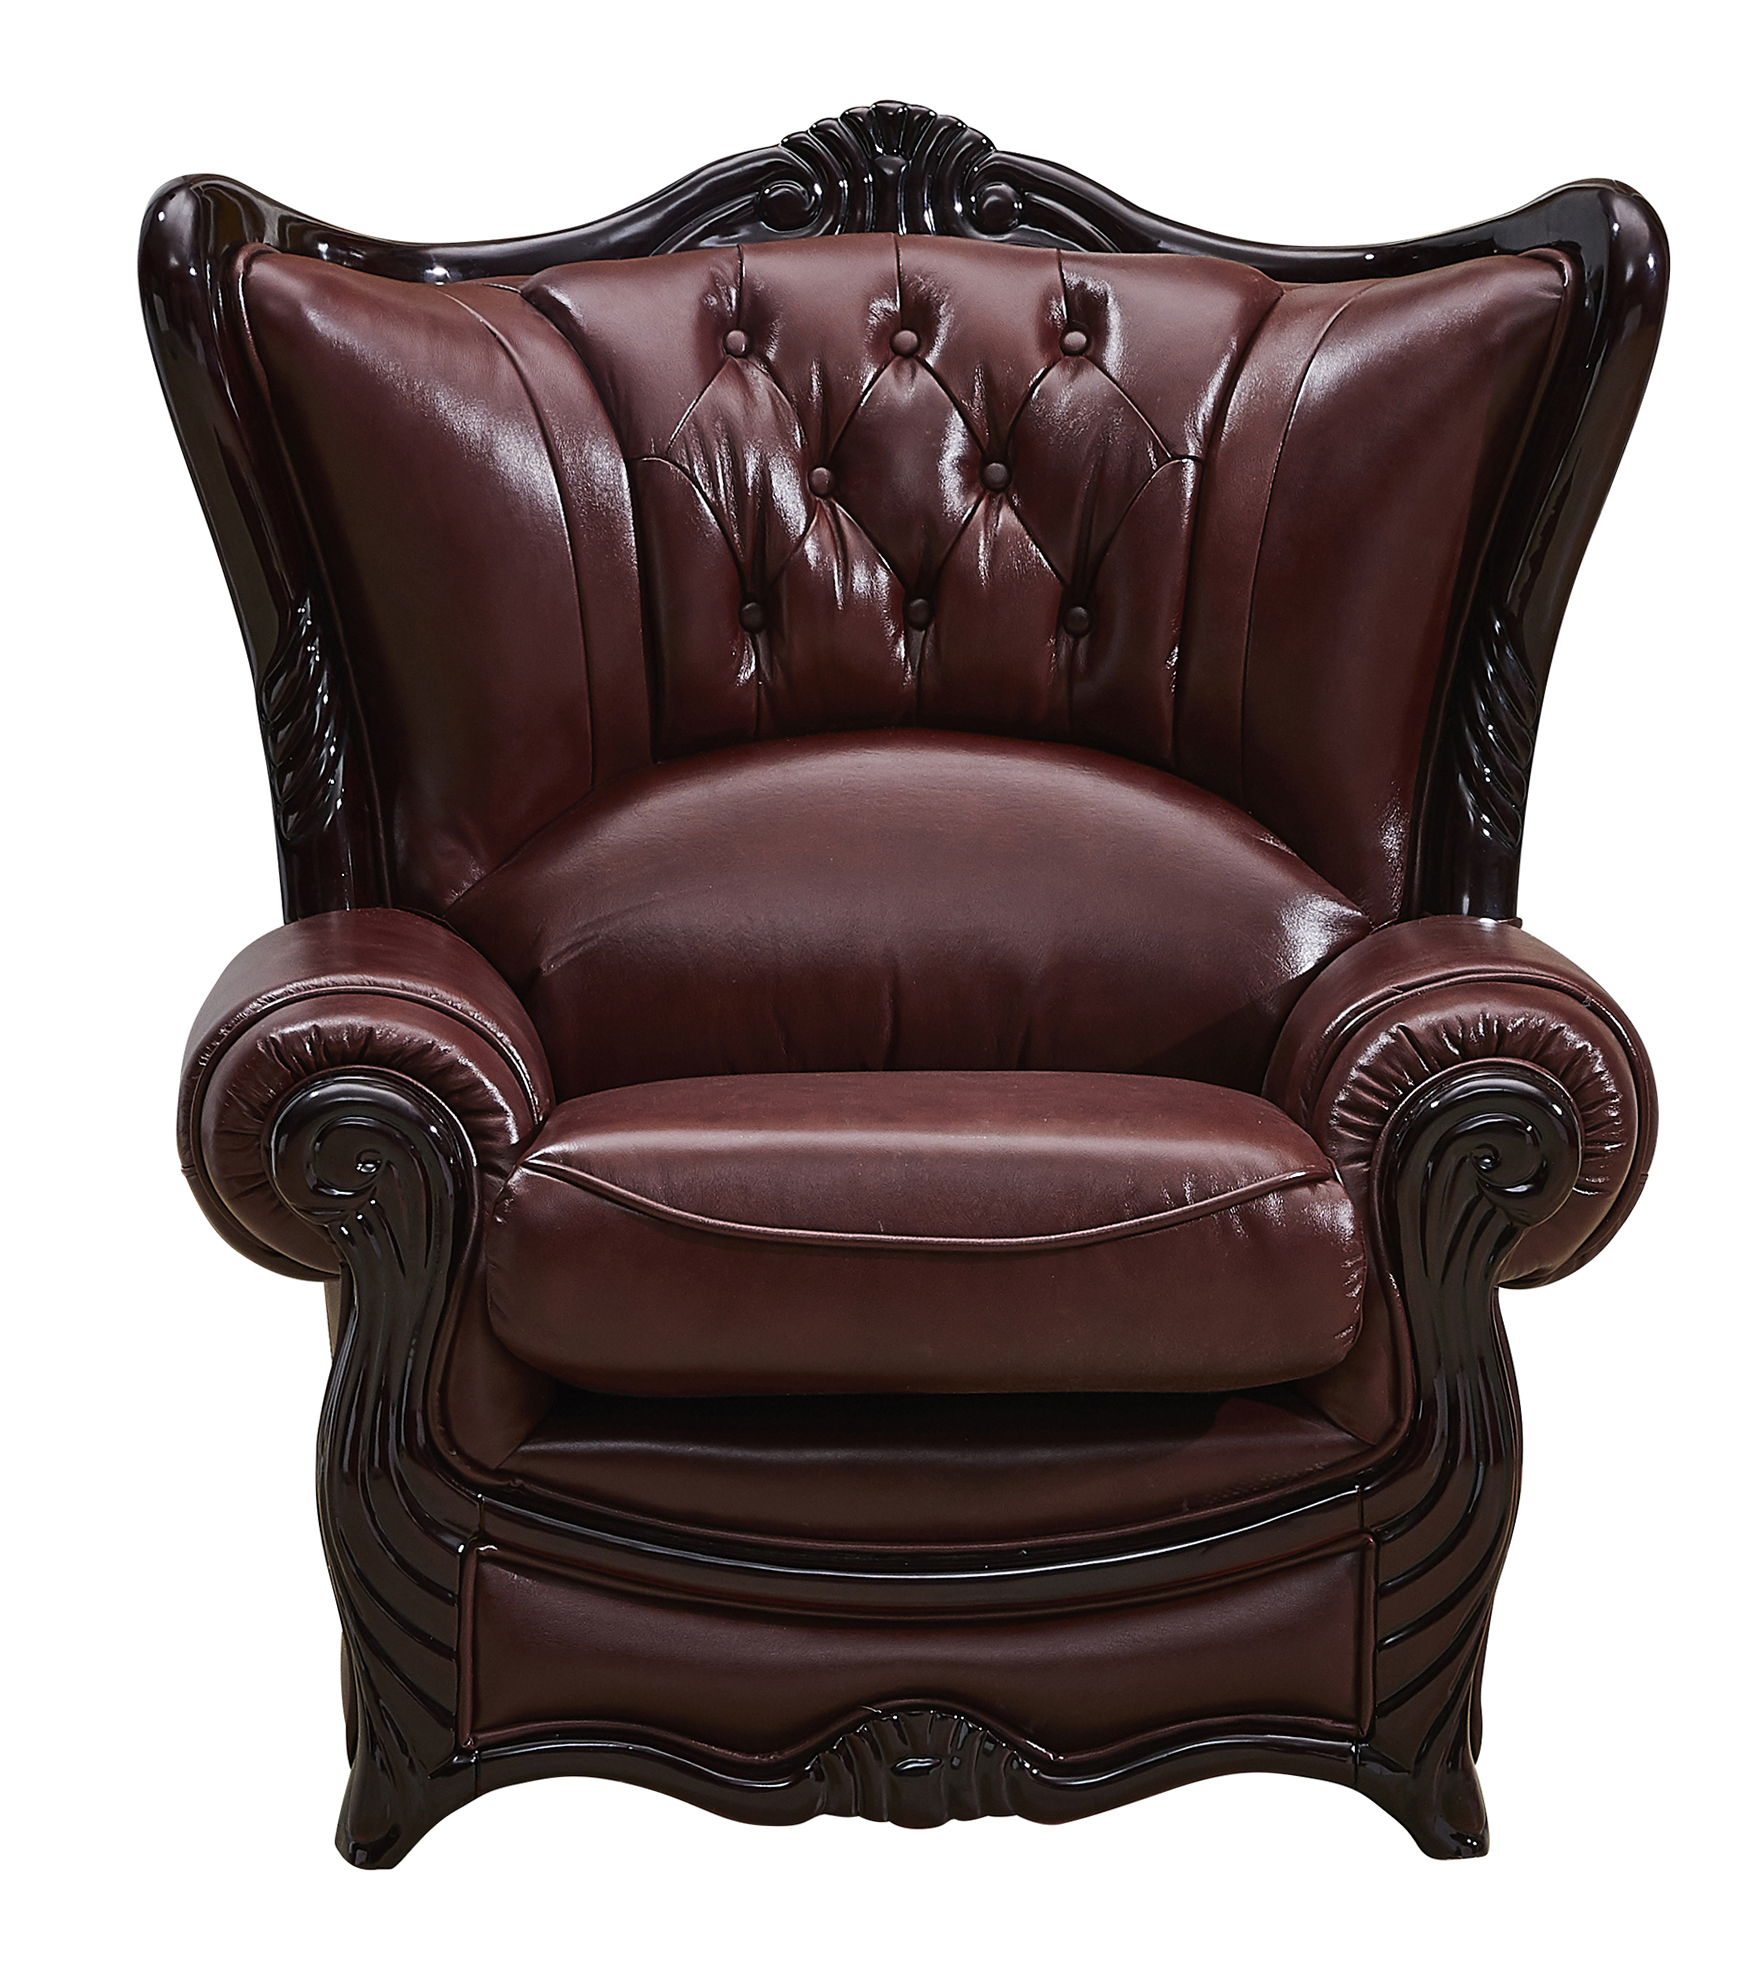 JH Kensington (#988) Burgundy Leather Chair on sale!